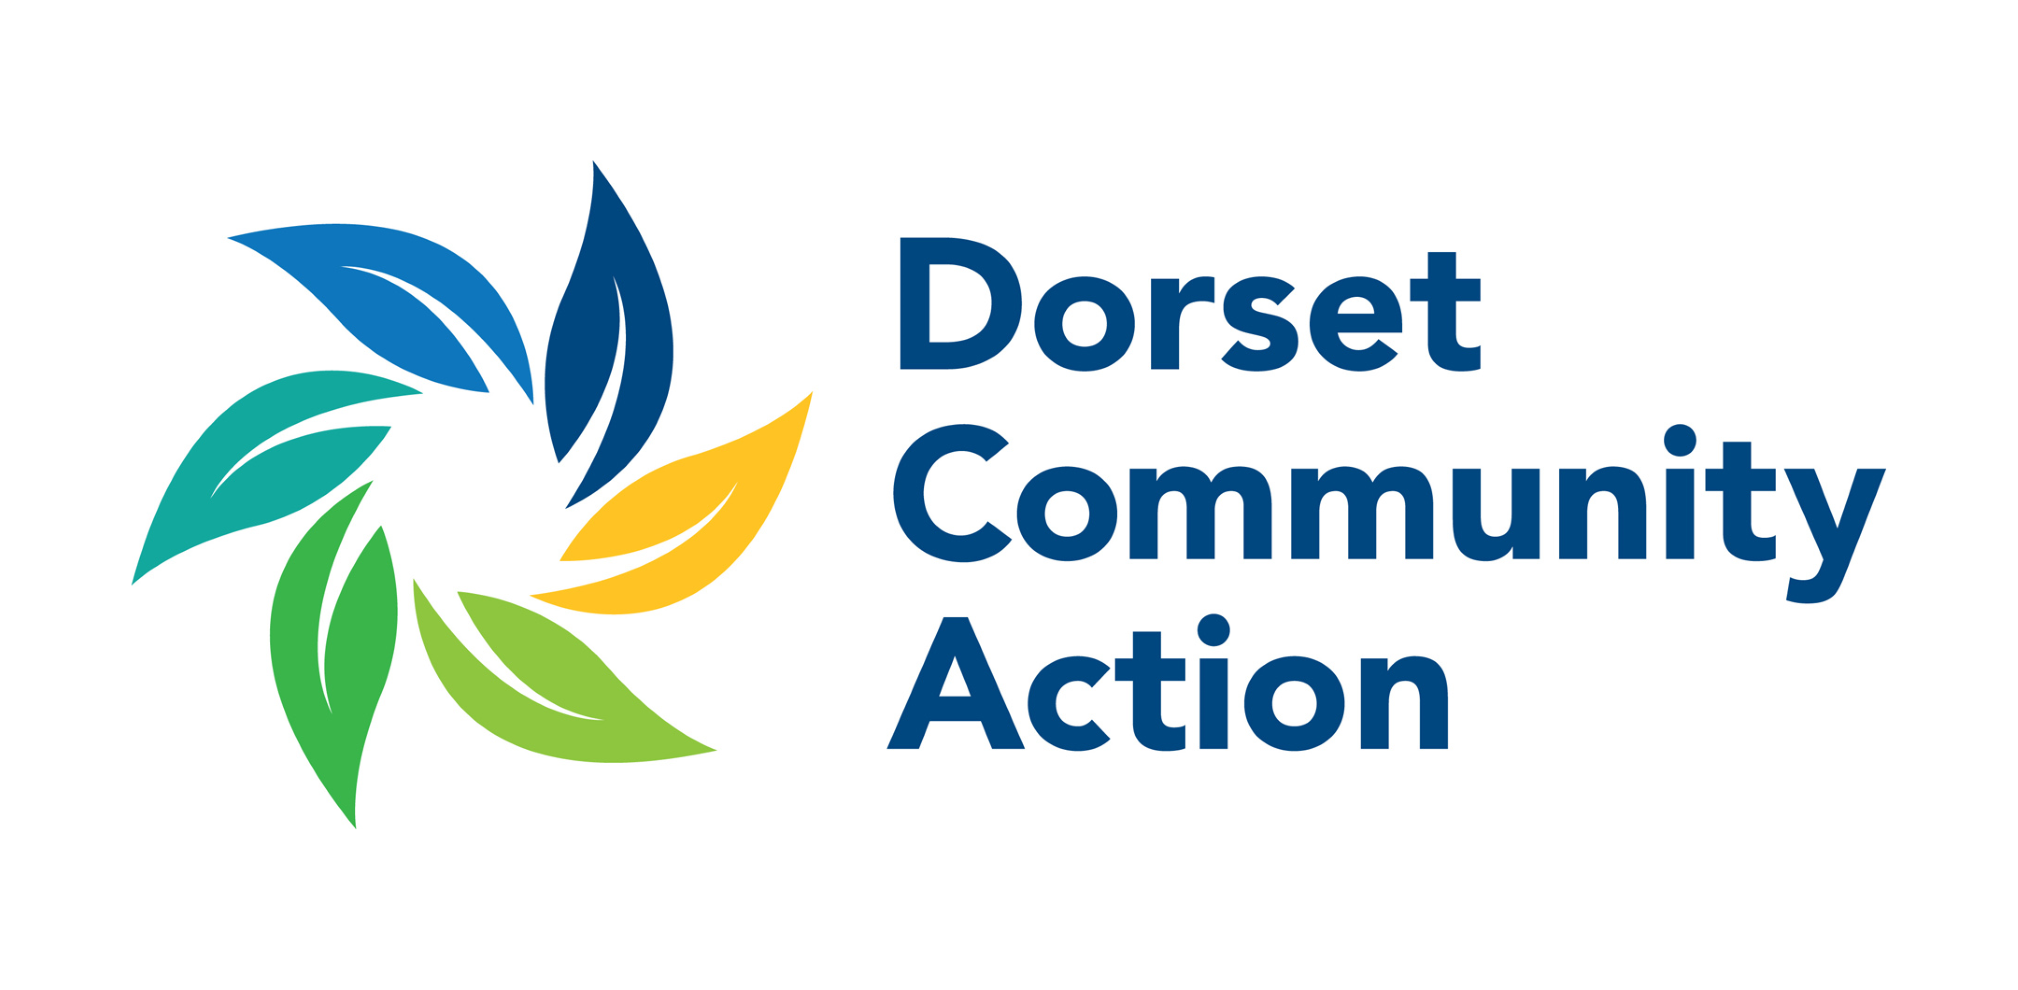 Dorset Community Action